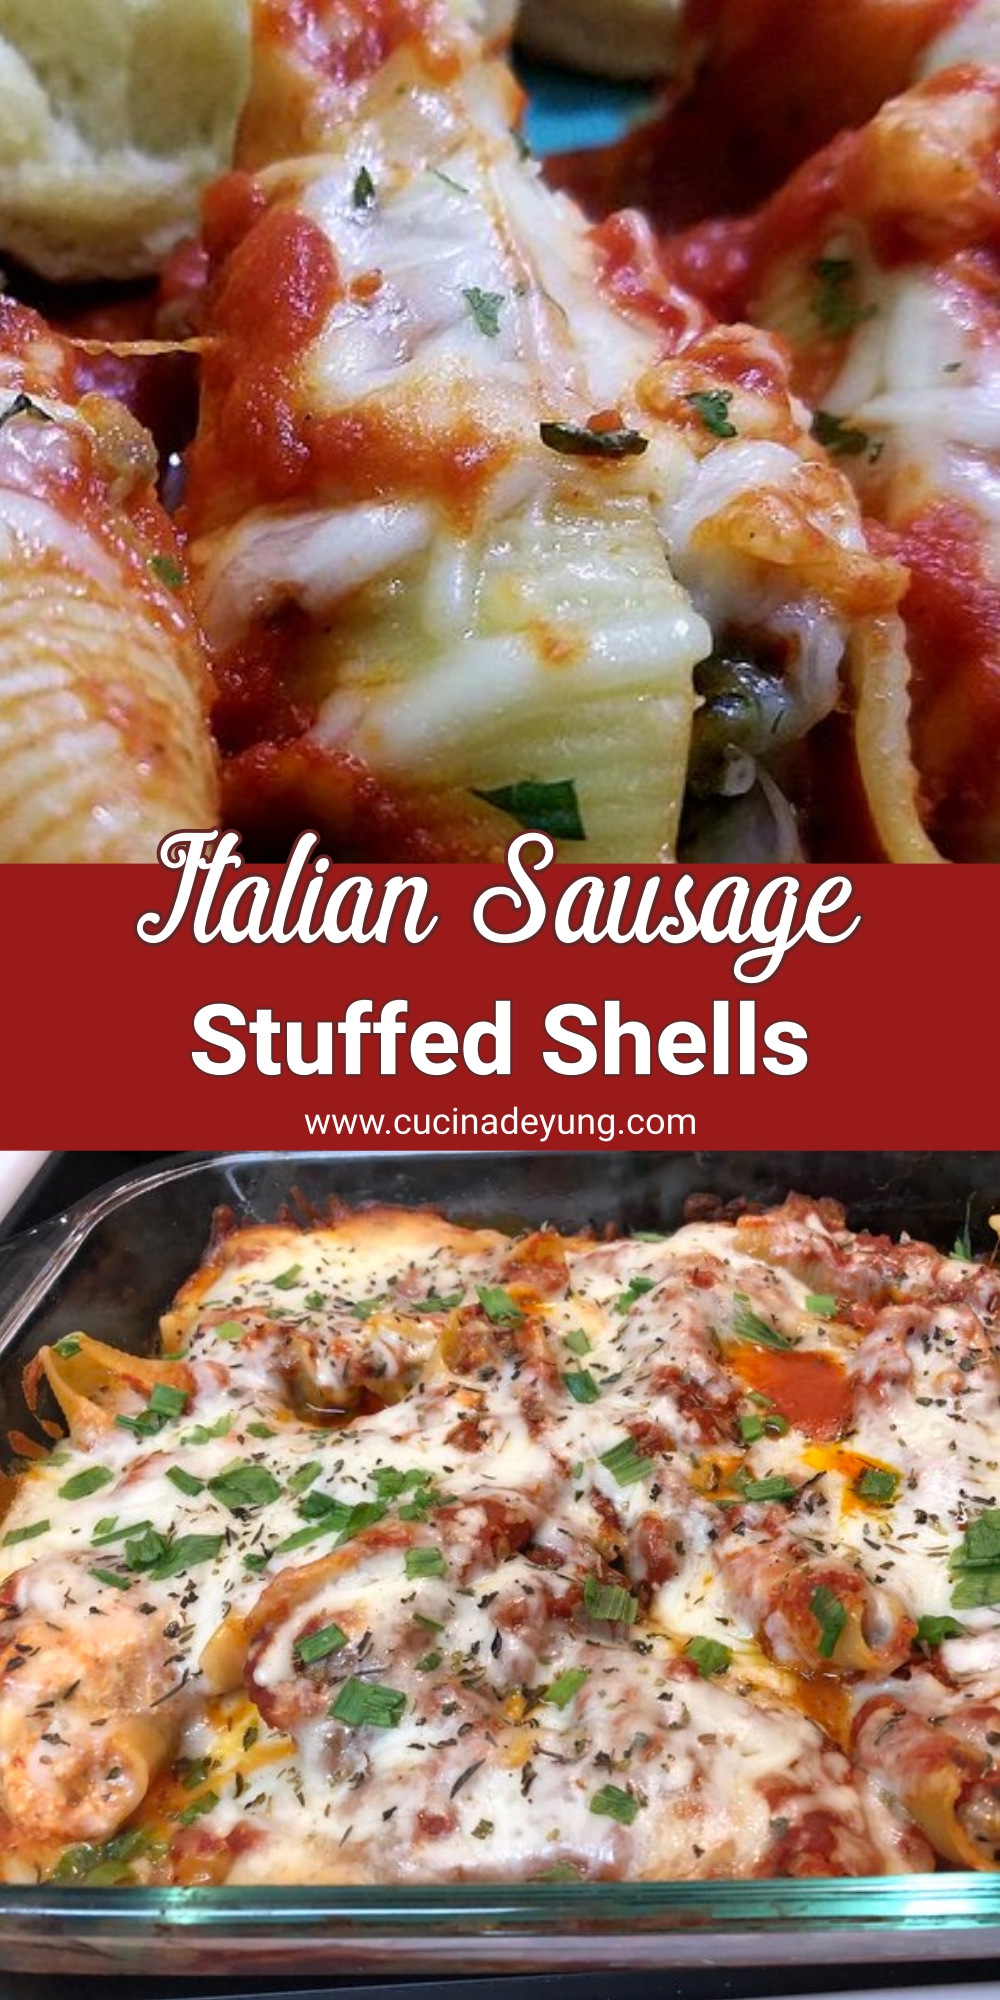 Italian Sausage Stuffed Shells Recipe – CUCINADEYUNG